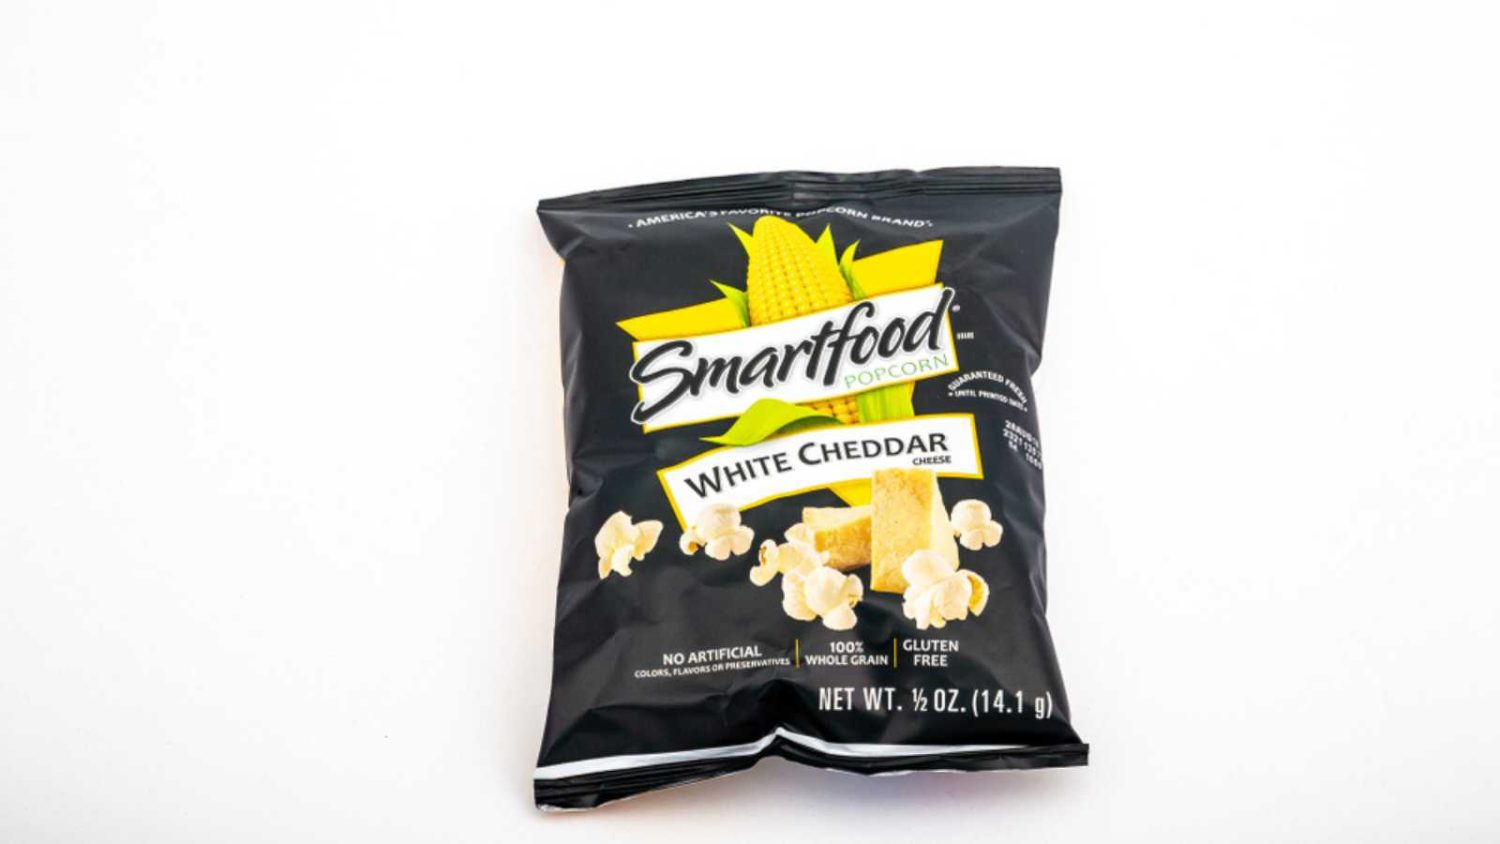 A bag of SmartFood White Cheddar Popcorn on a white background